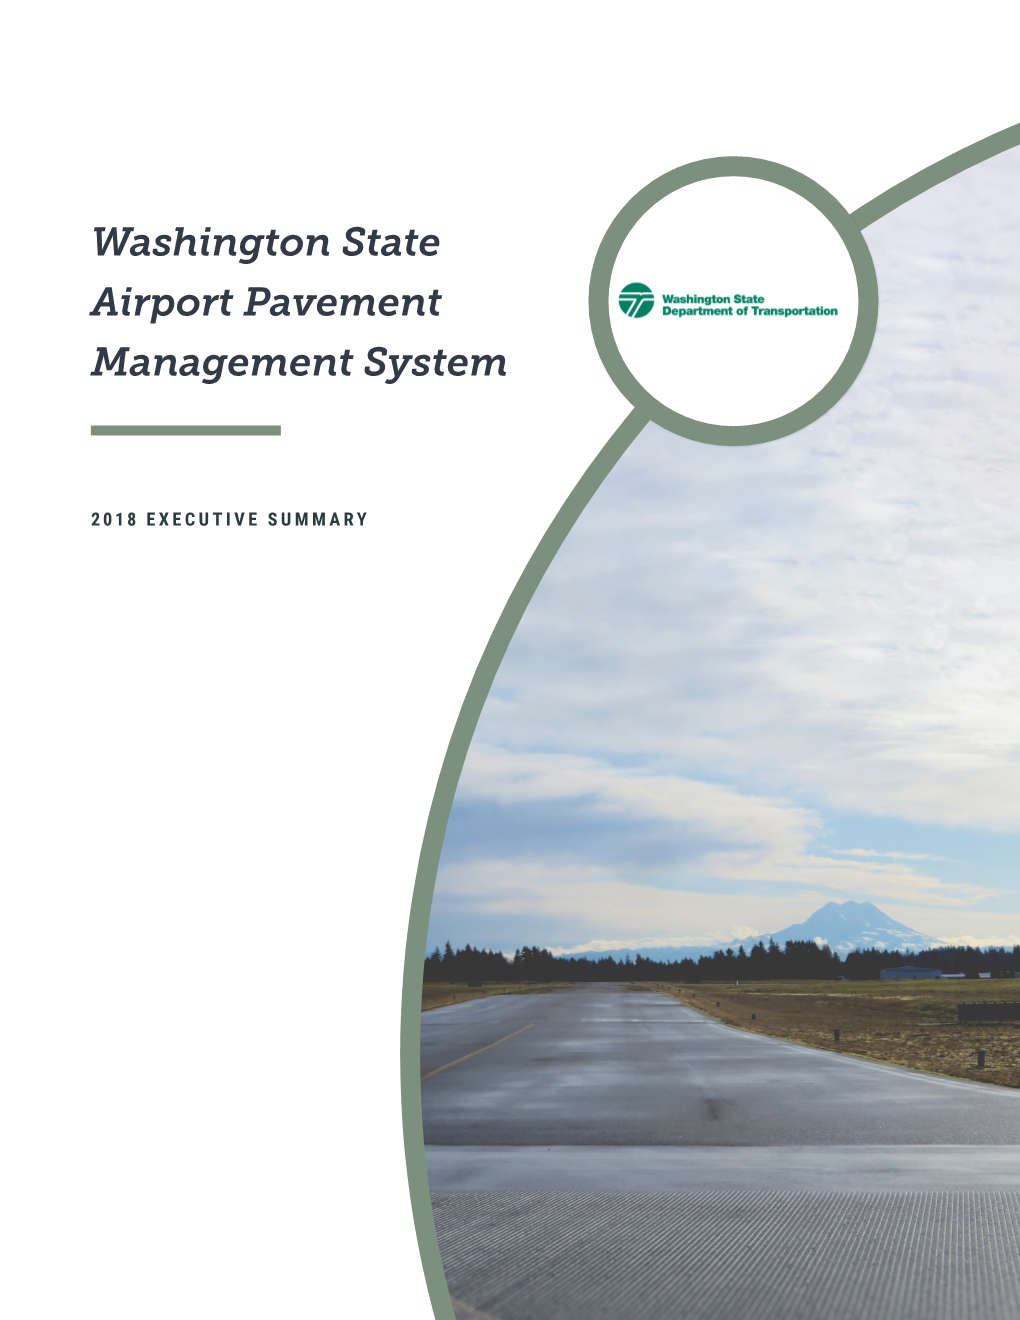 Washington State Airport Pavement Management System 2018